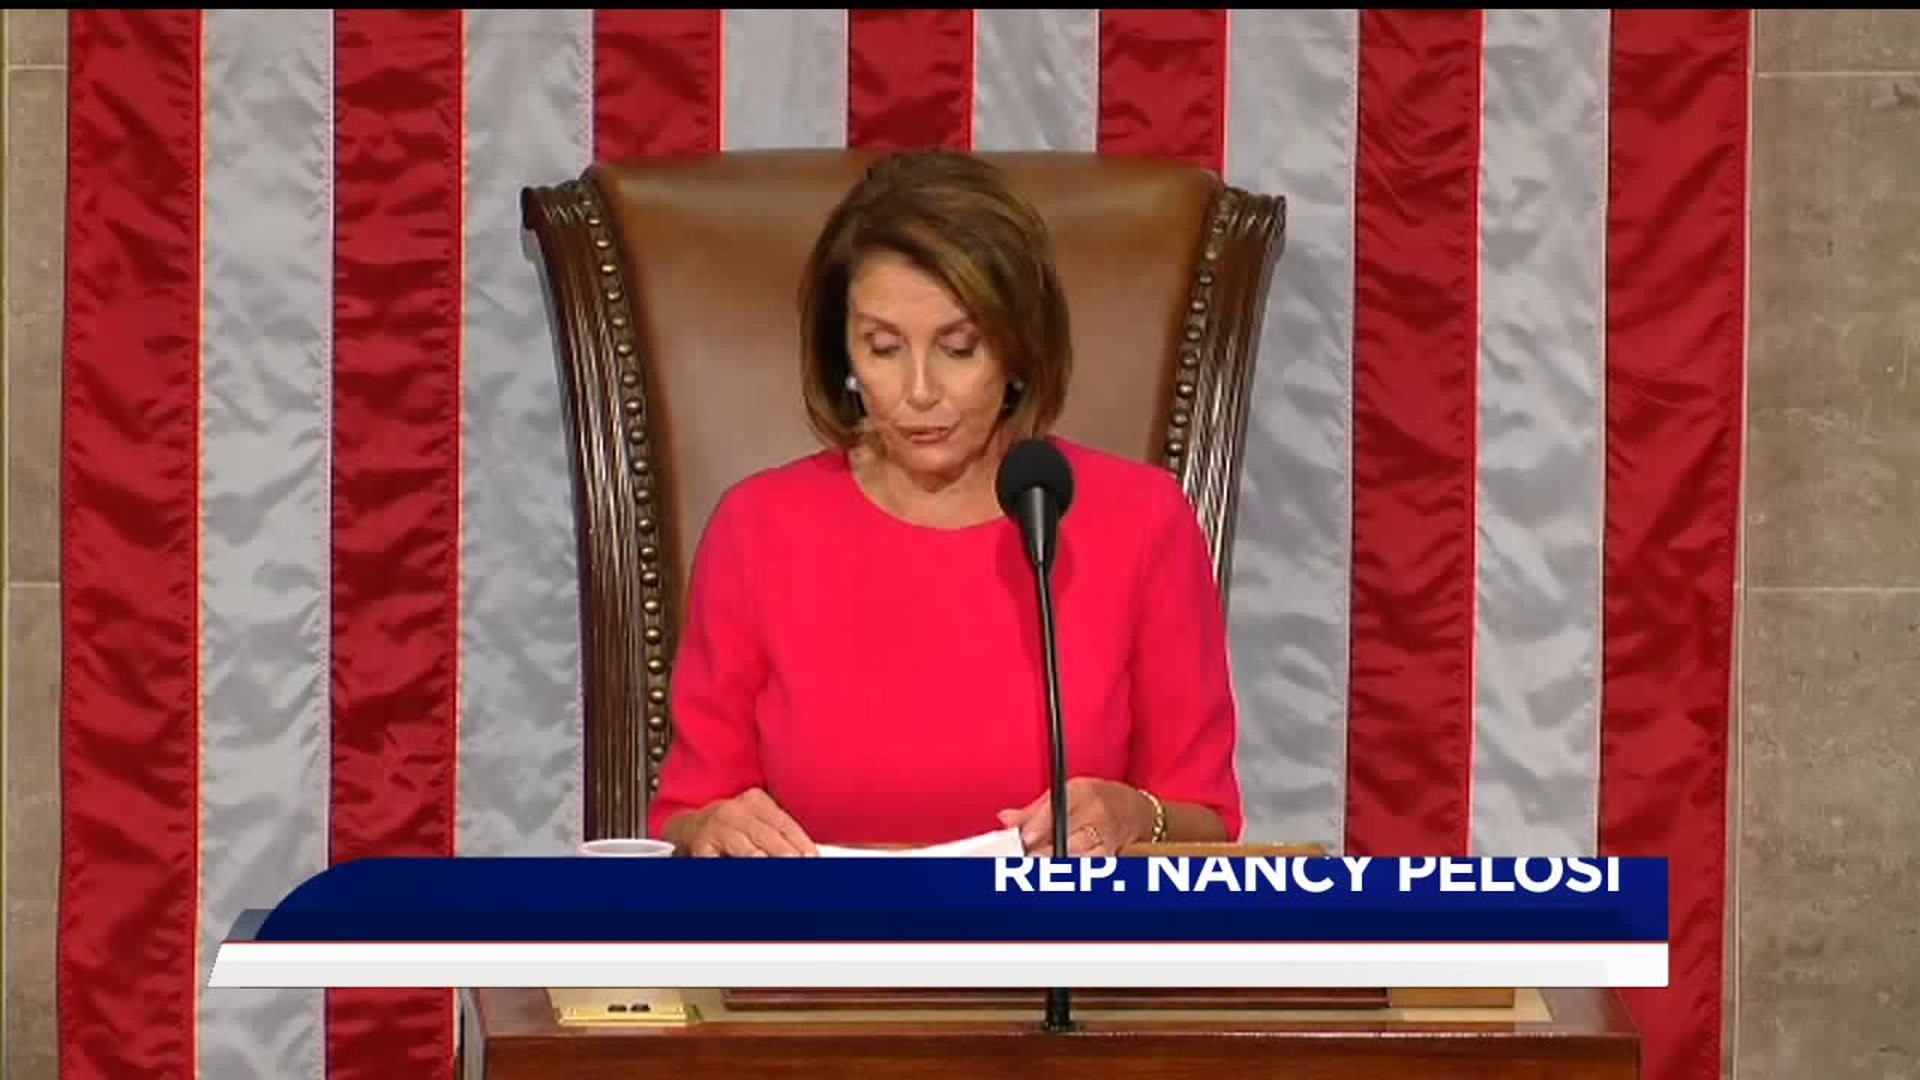 Nancy Pelosi is House Speaker